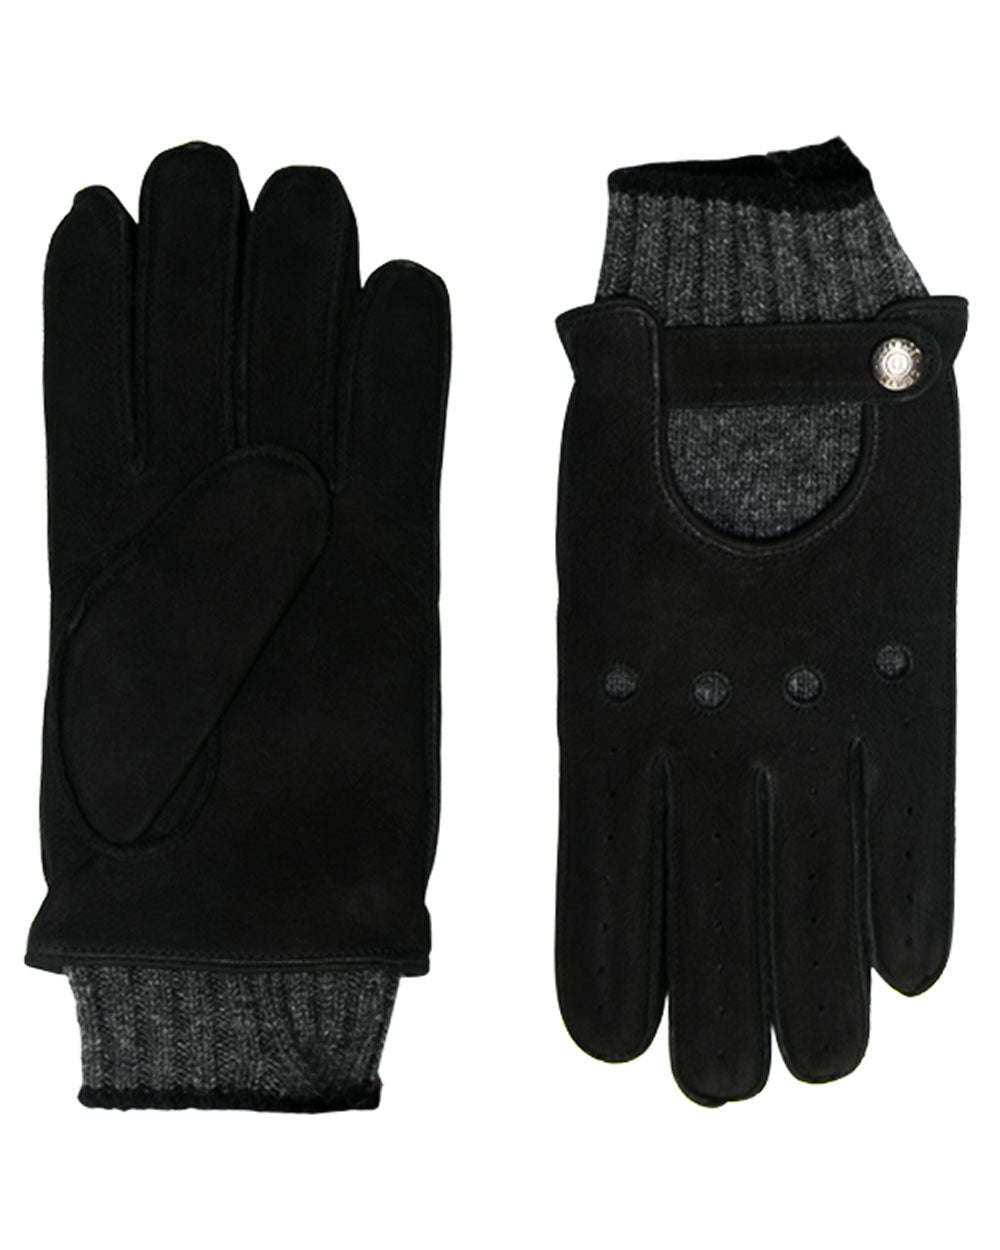 Hambledon Black Nubuck with Wool Cuff Gloves